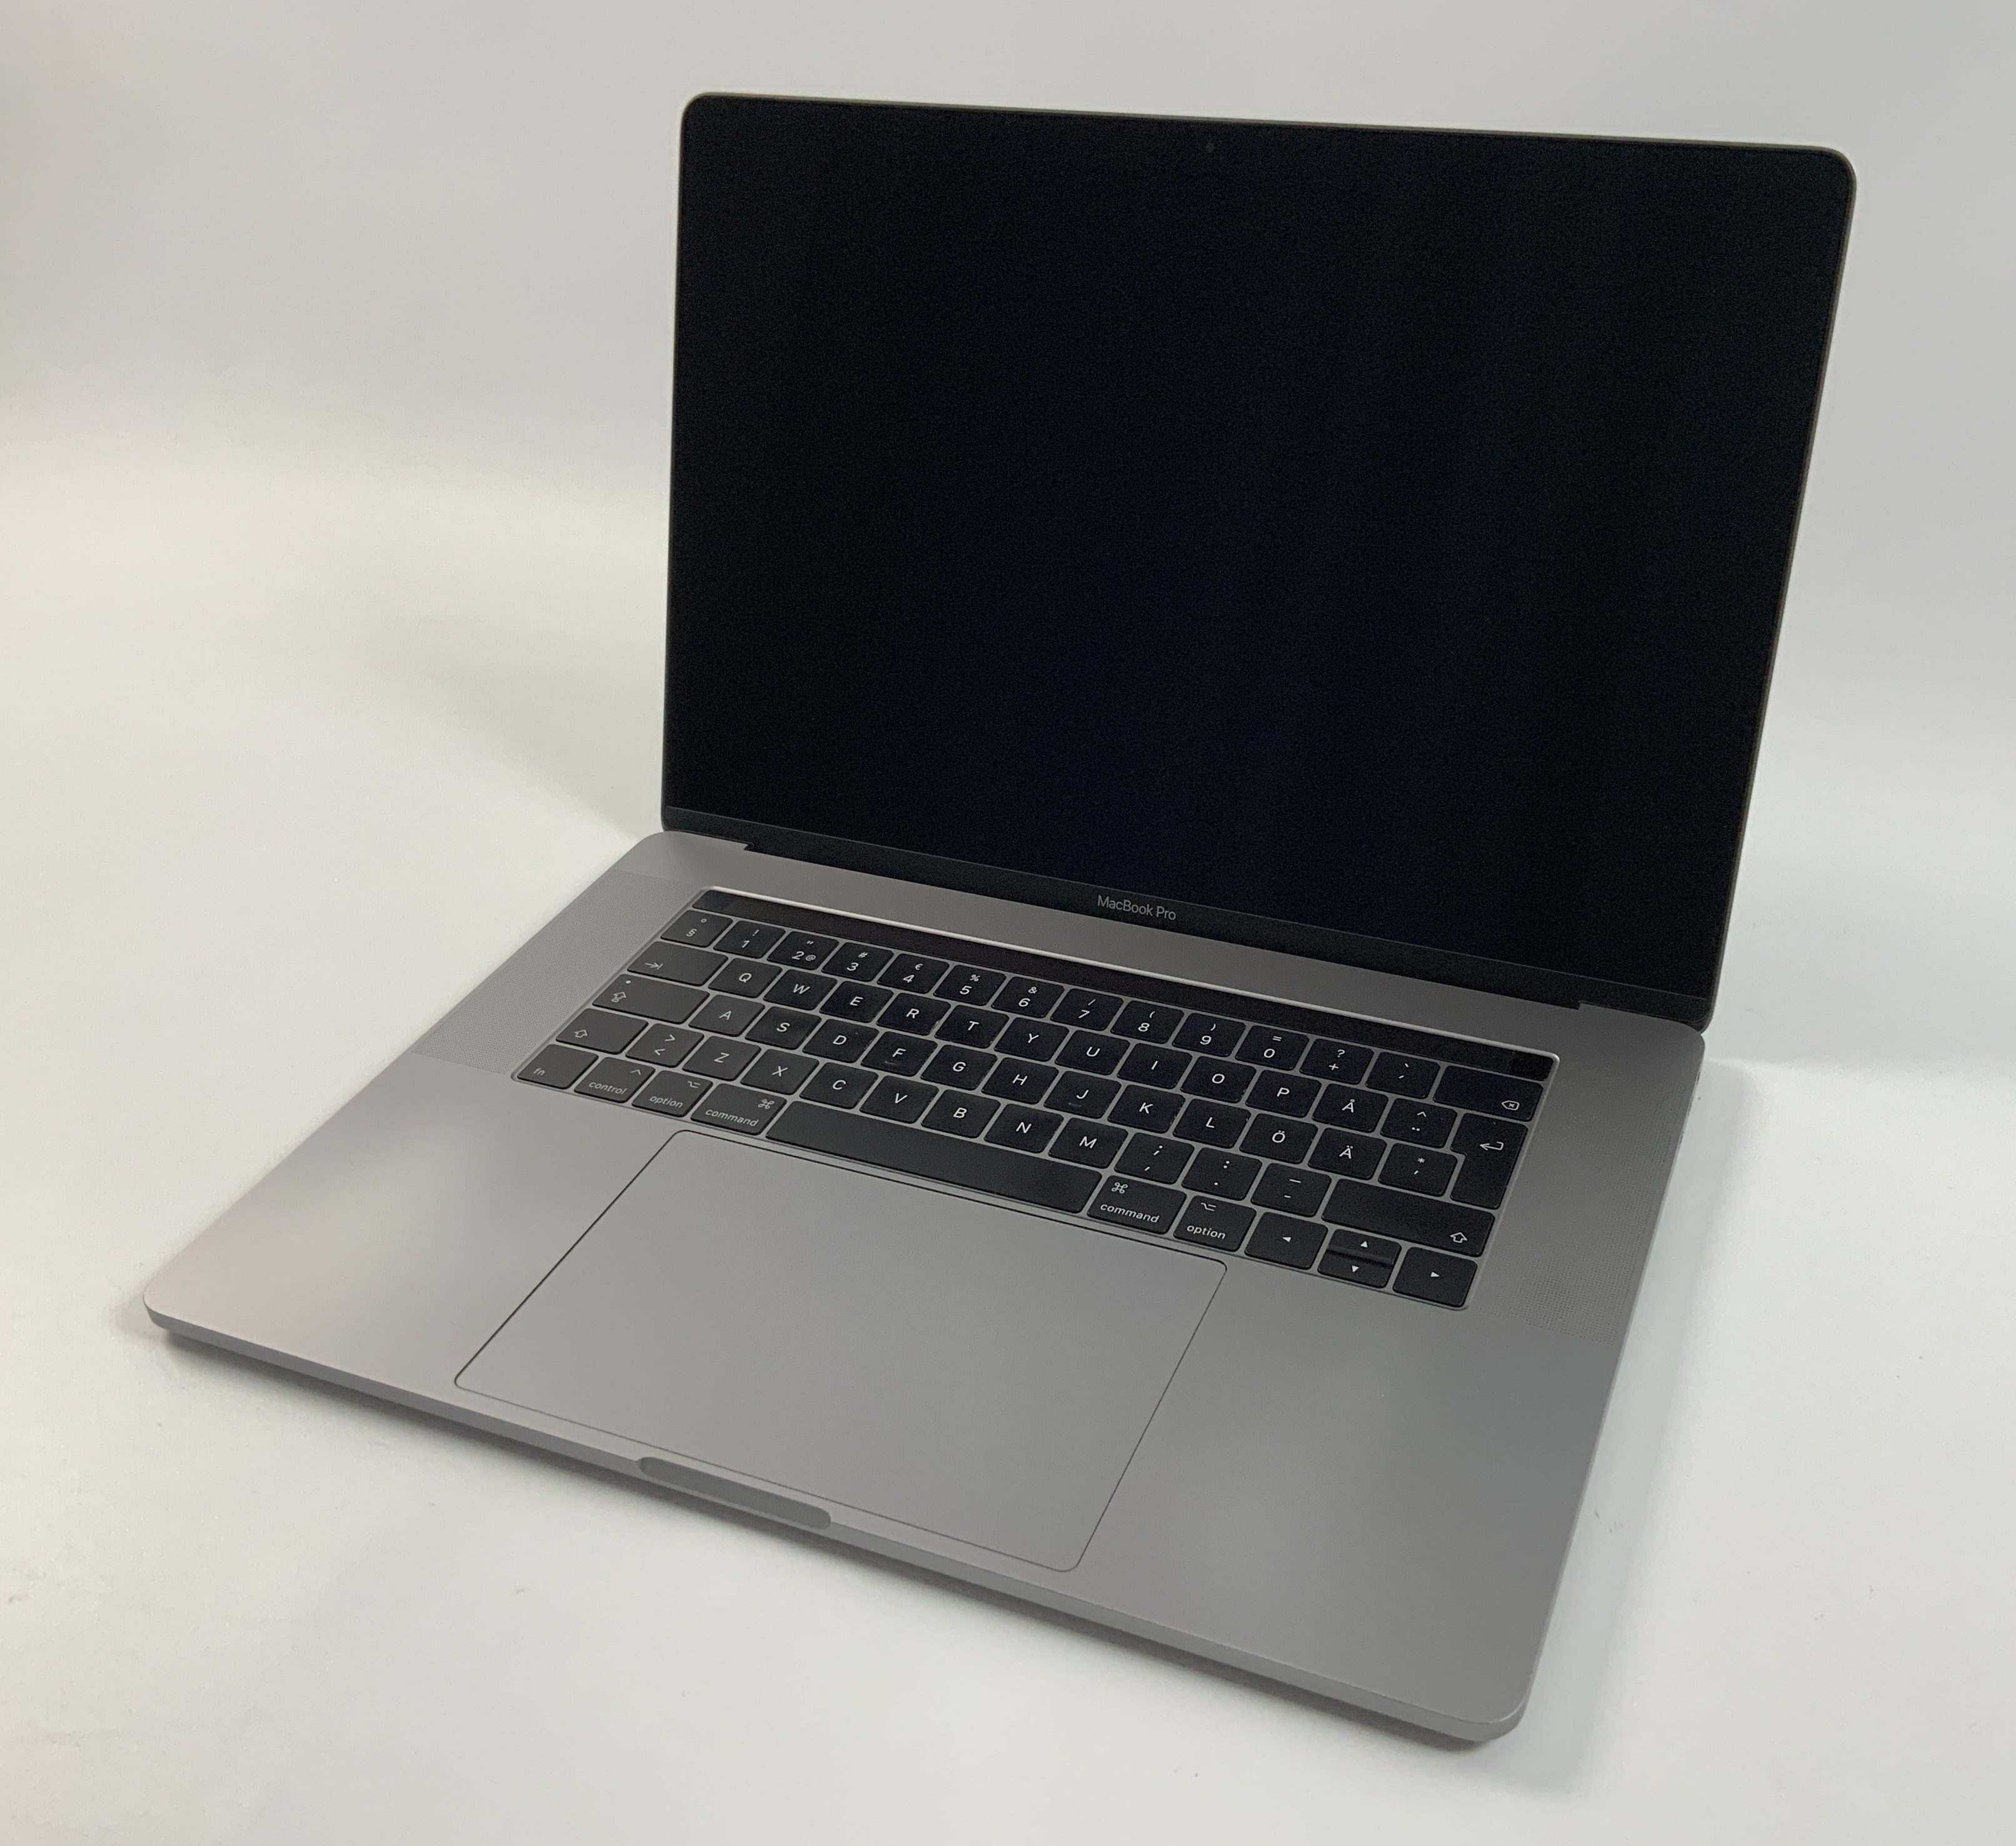 MacBook Pro 15" Touch Bar Late 2016 (Intel Quad-Core i7 2.9 GHz 16 GB RAM 1 TB SSD), Space Gray, Intel Quad-Core i7 2.9 GHz, 16 GB RAM, 1 TB SSD, image 1